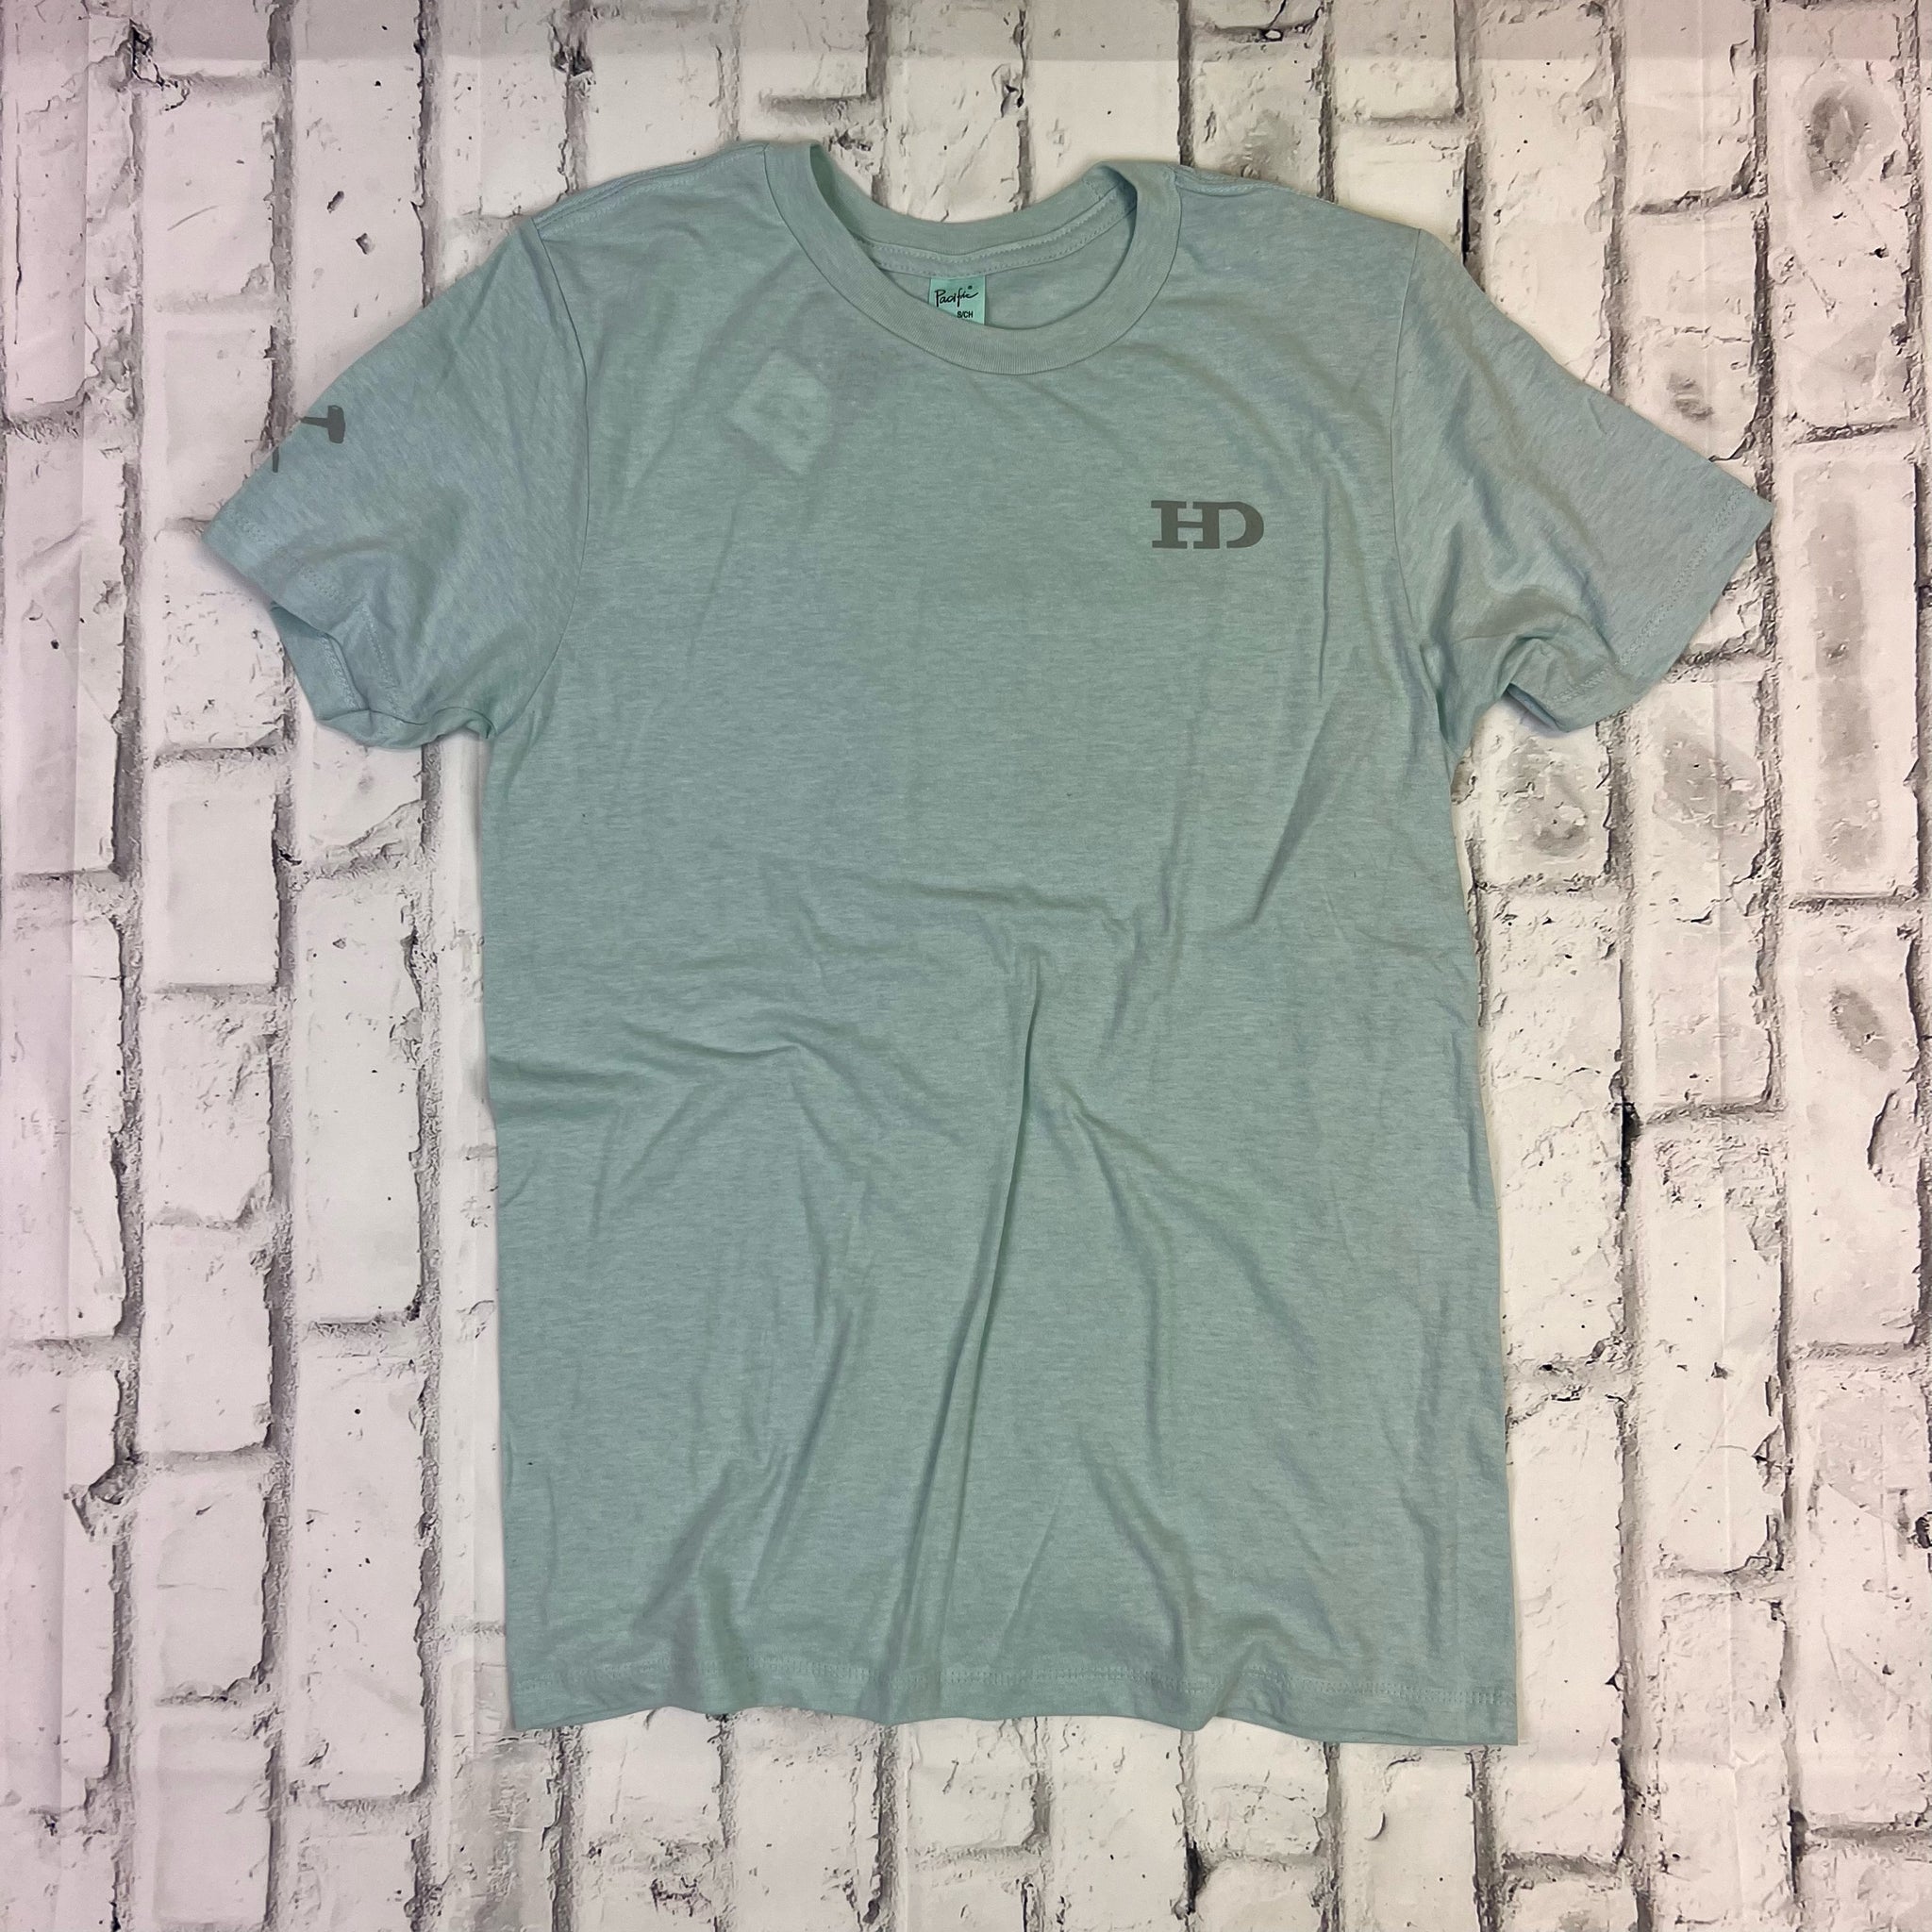 Hammer Down "Basic Tee" Short Sleeve T-shirt - Seaside Blue